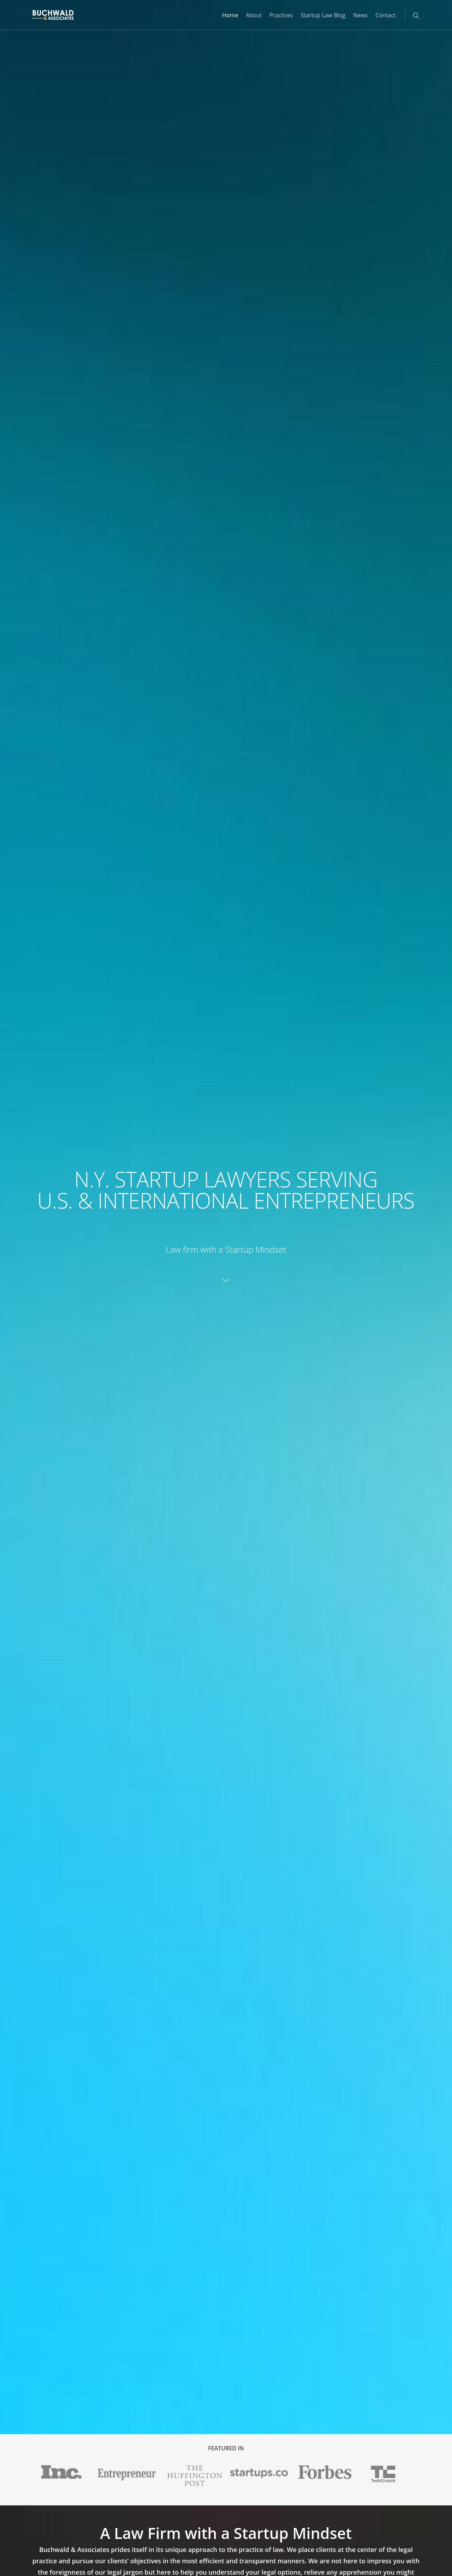 Buchwald & Associates - New York NY Lawyers